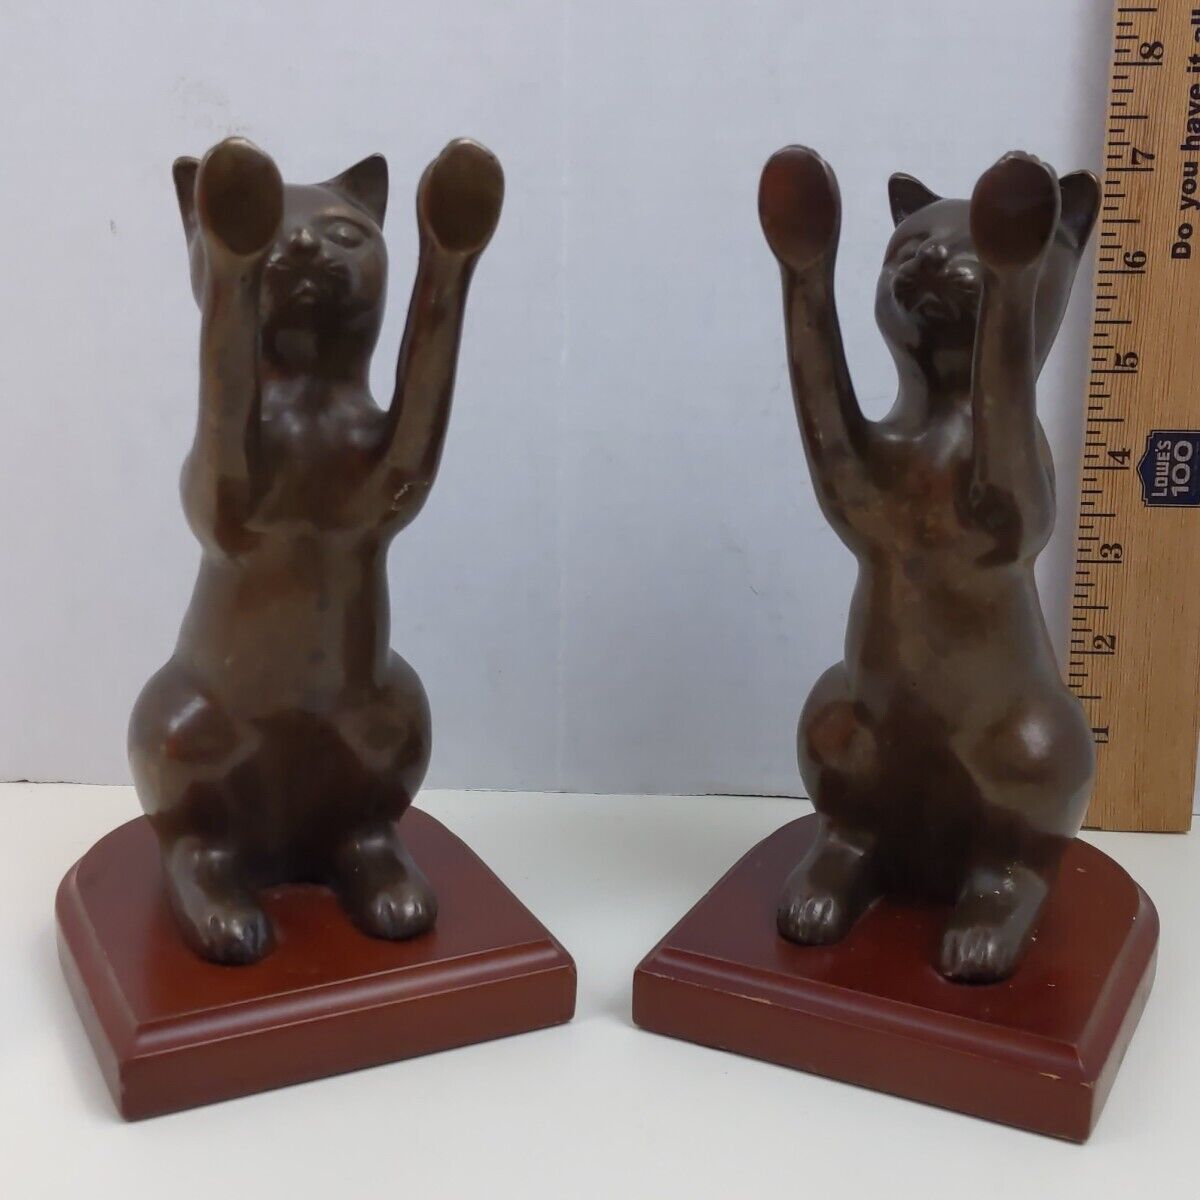 Vintage Bronze Cat Bookends Sculpture Figurine Art Deco Office Home Decor 